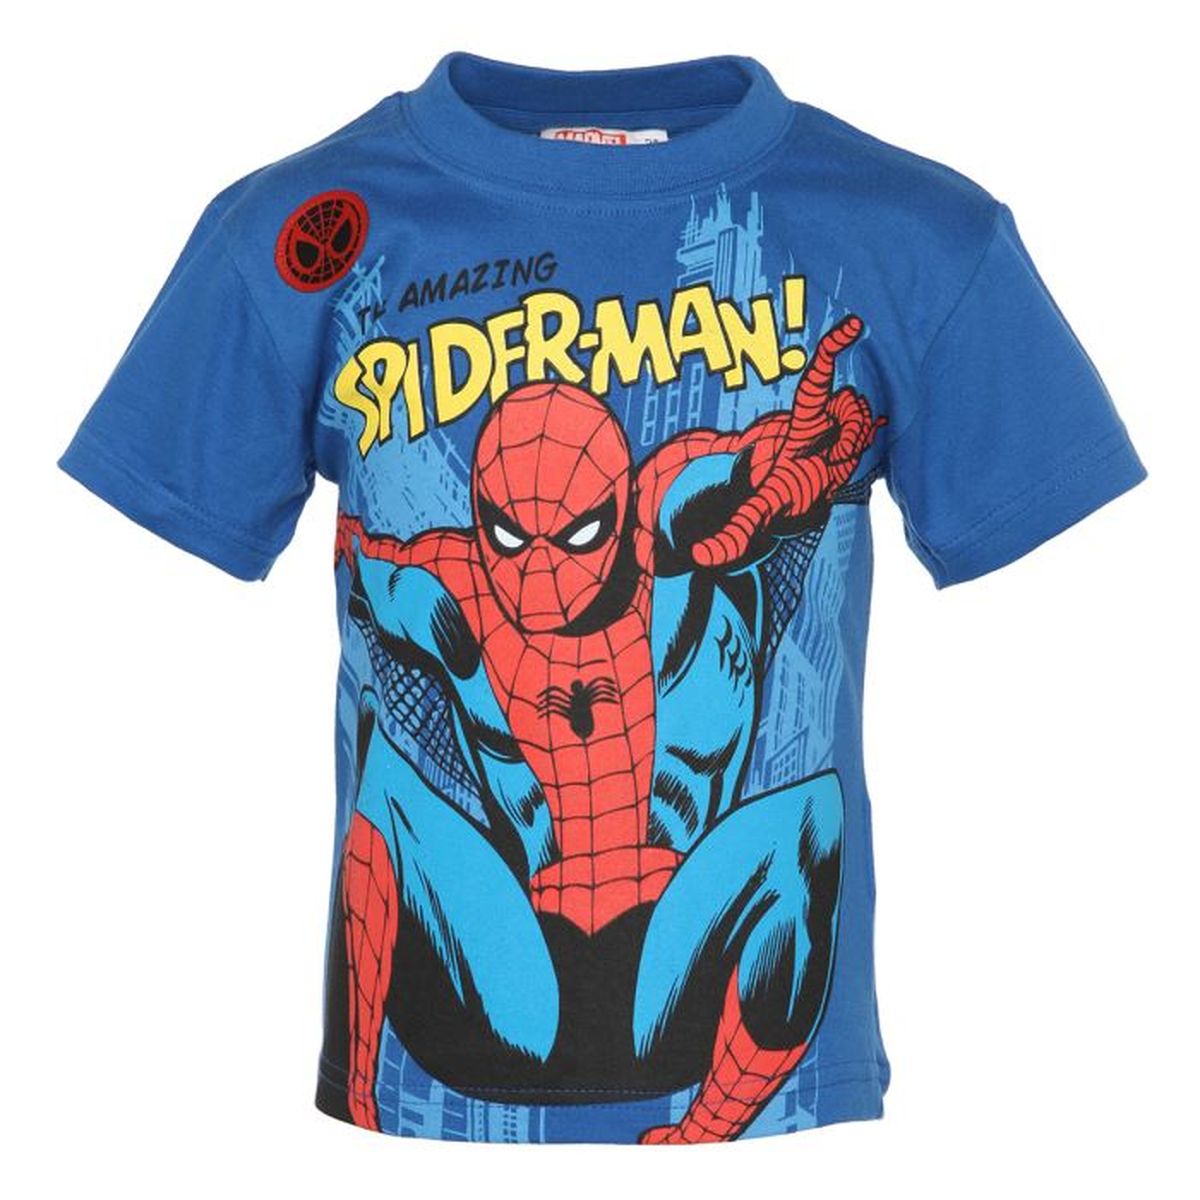 Garçons Enfants Spiderman Mickey Cars à manches courtes tee tshirt top t-shirt Âge 3-8 Ans 